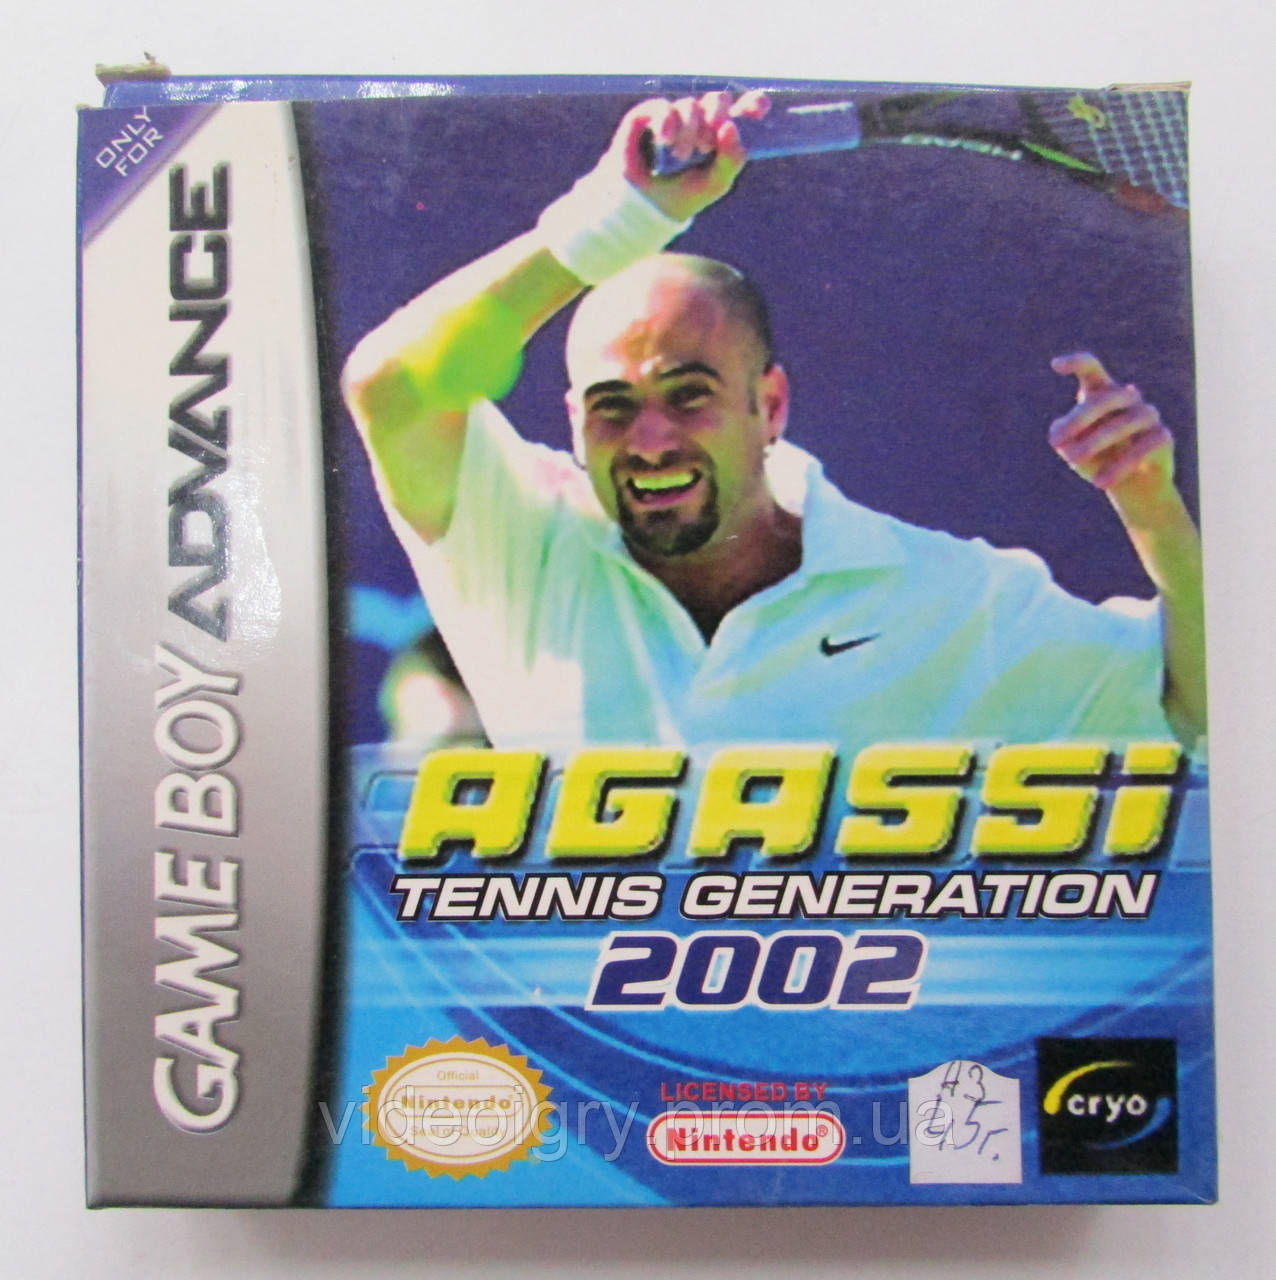 Agassi Tennis Generation 2002 картридж Game Boy Advance (GBA)